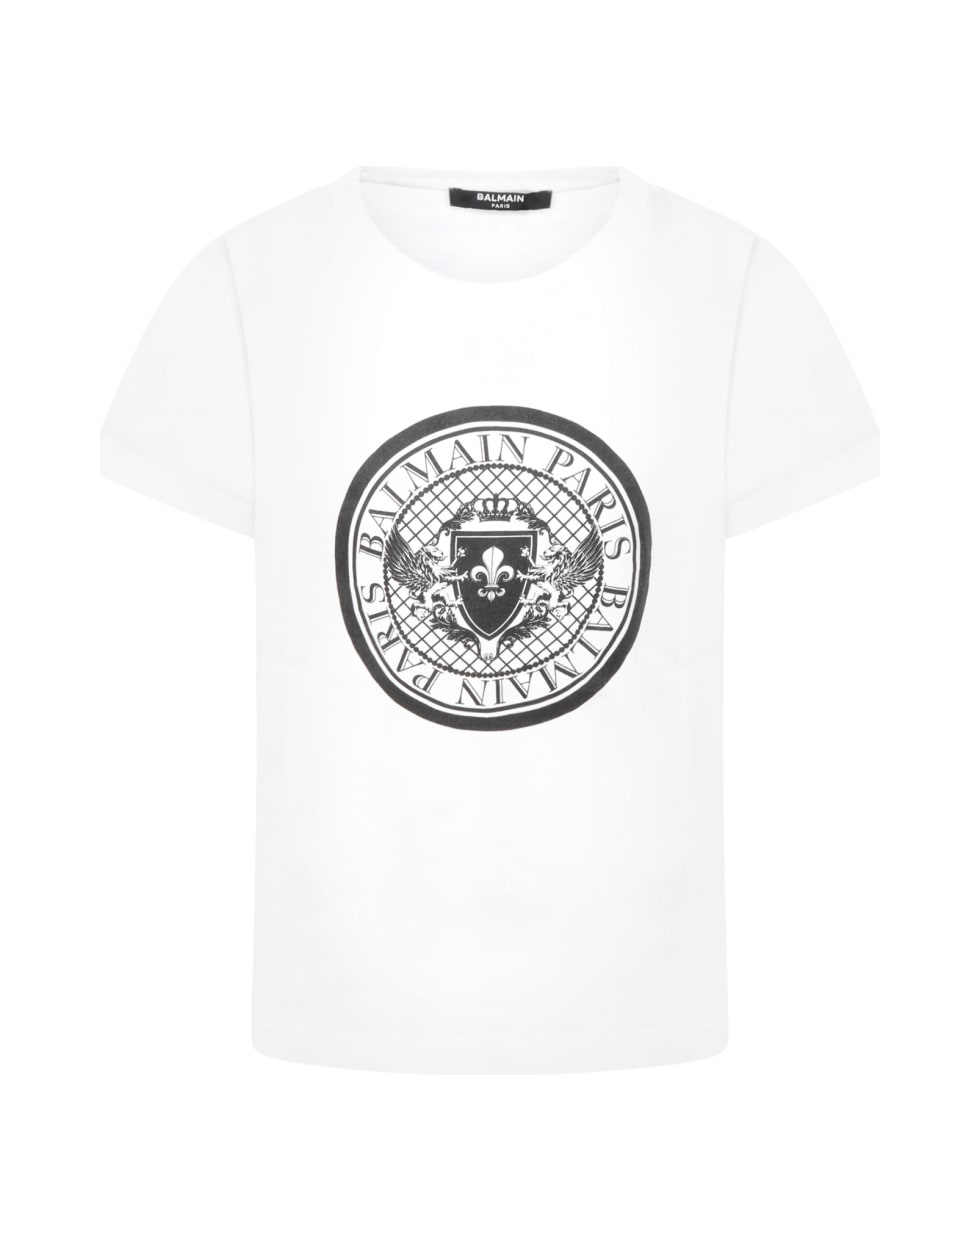 Balmain White T-shirt For Kids With Logos - Bianco/Nero